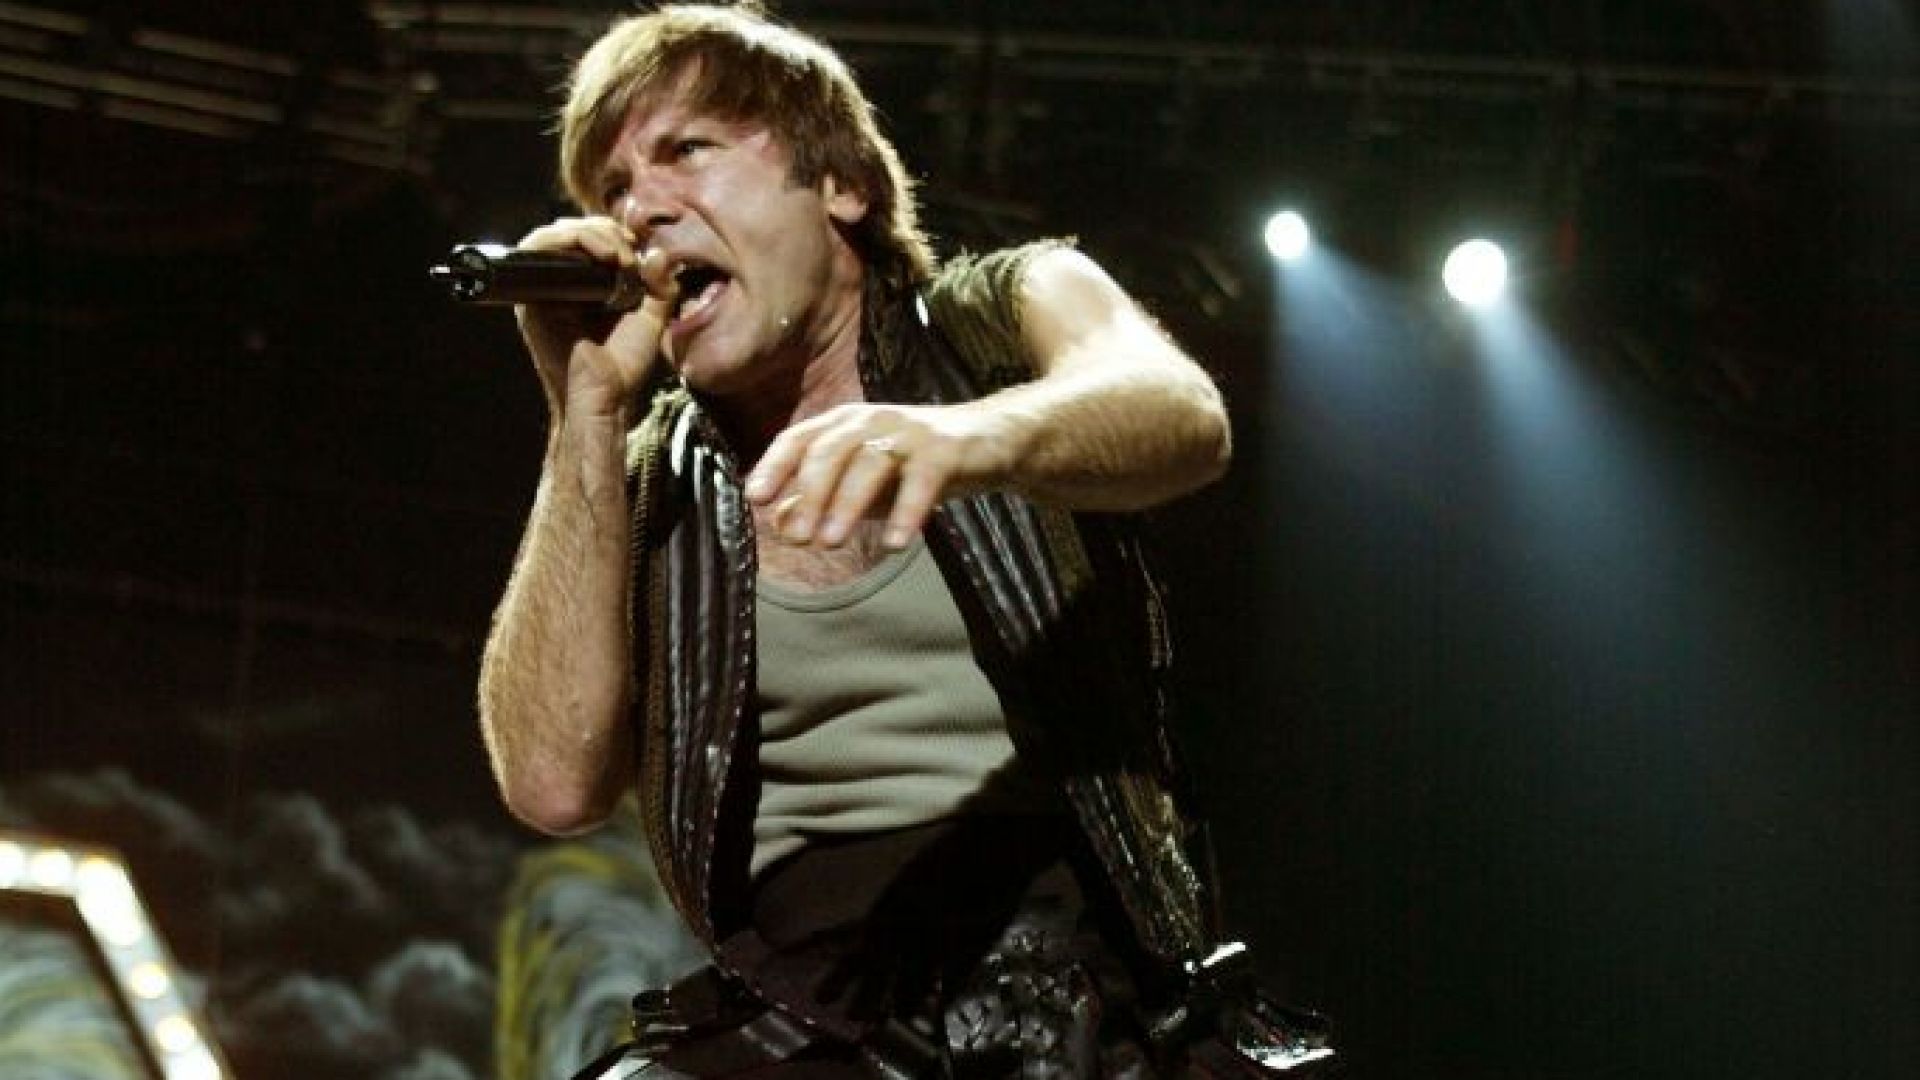 Брус Дикинсън от Iron Maiden на самостоятелно турне